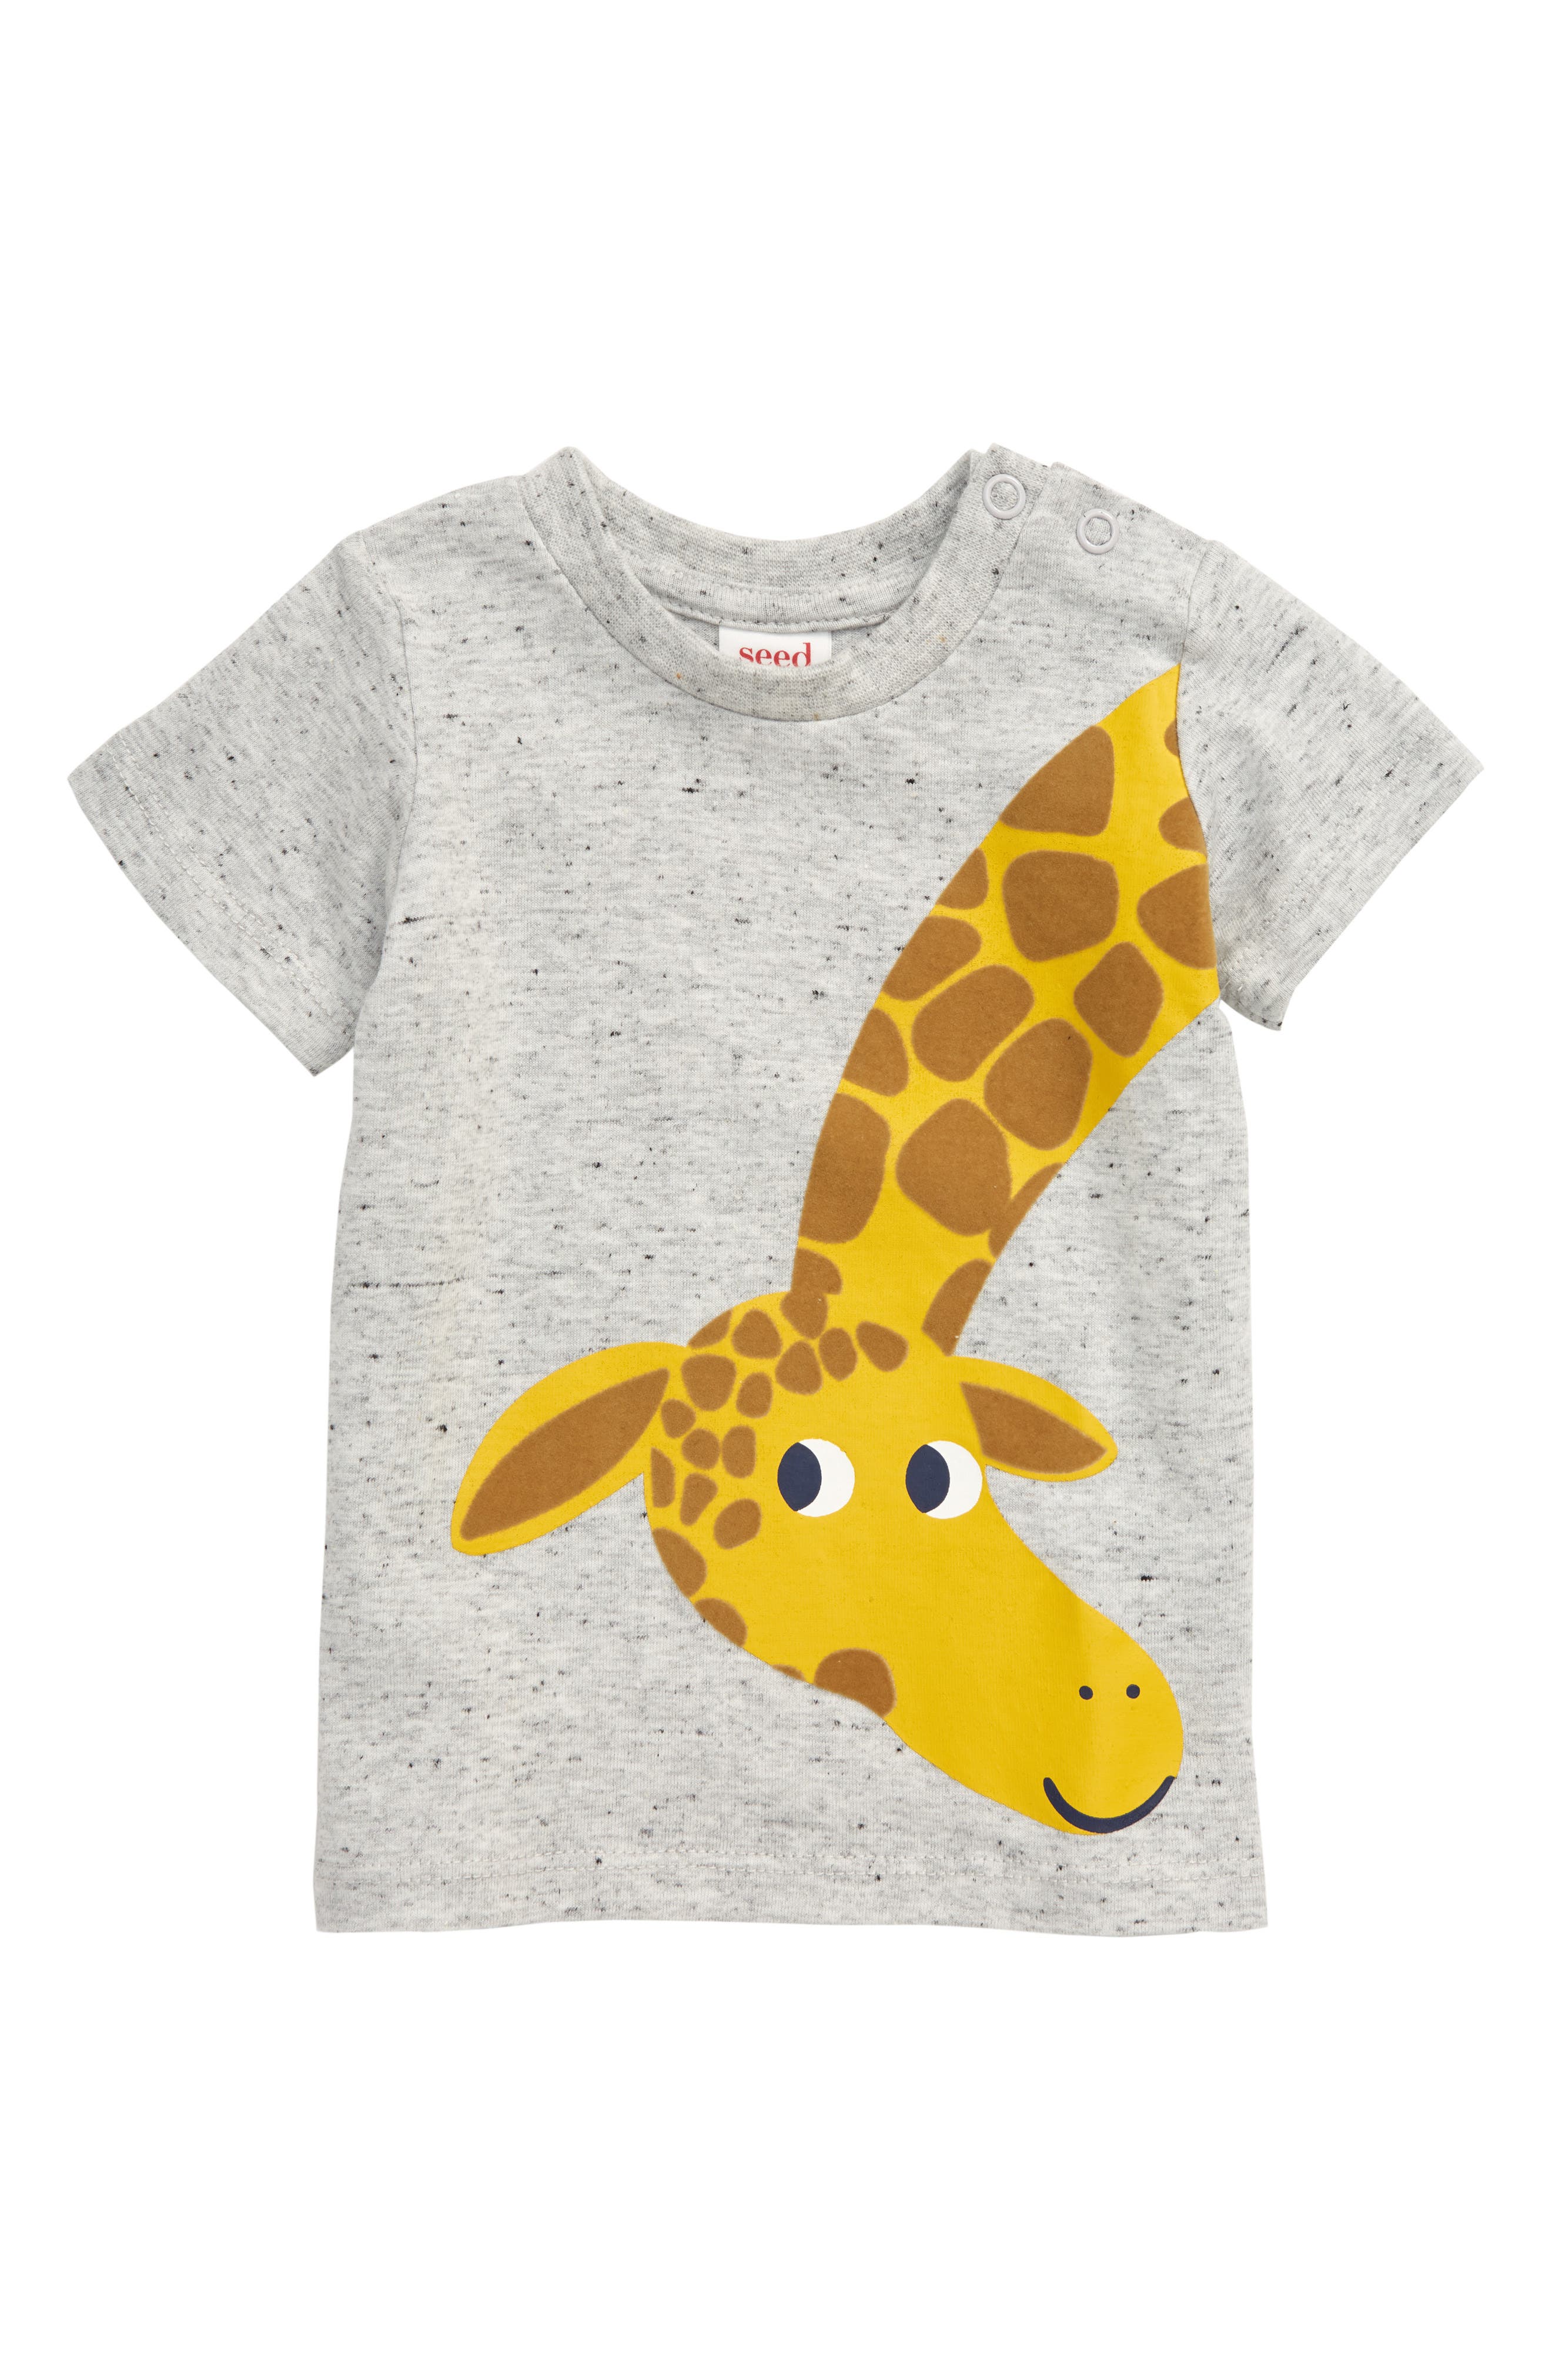 giraffe print baby clothes